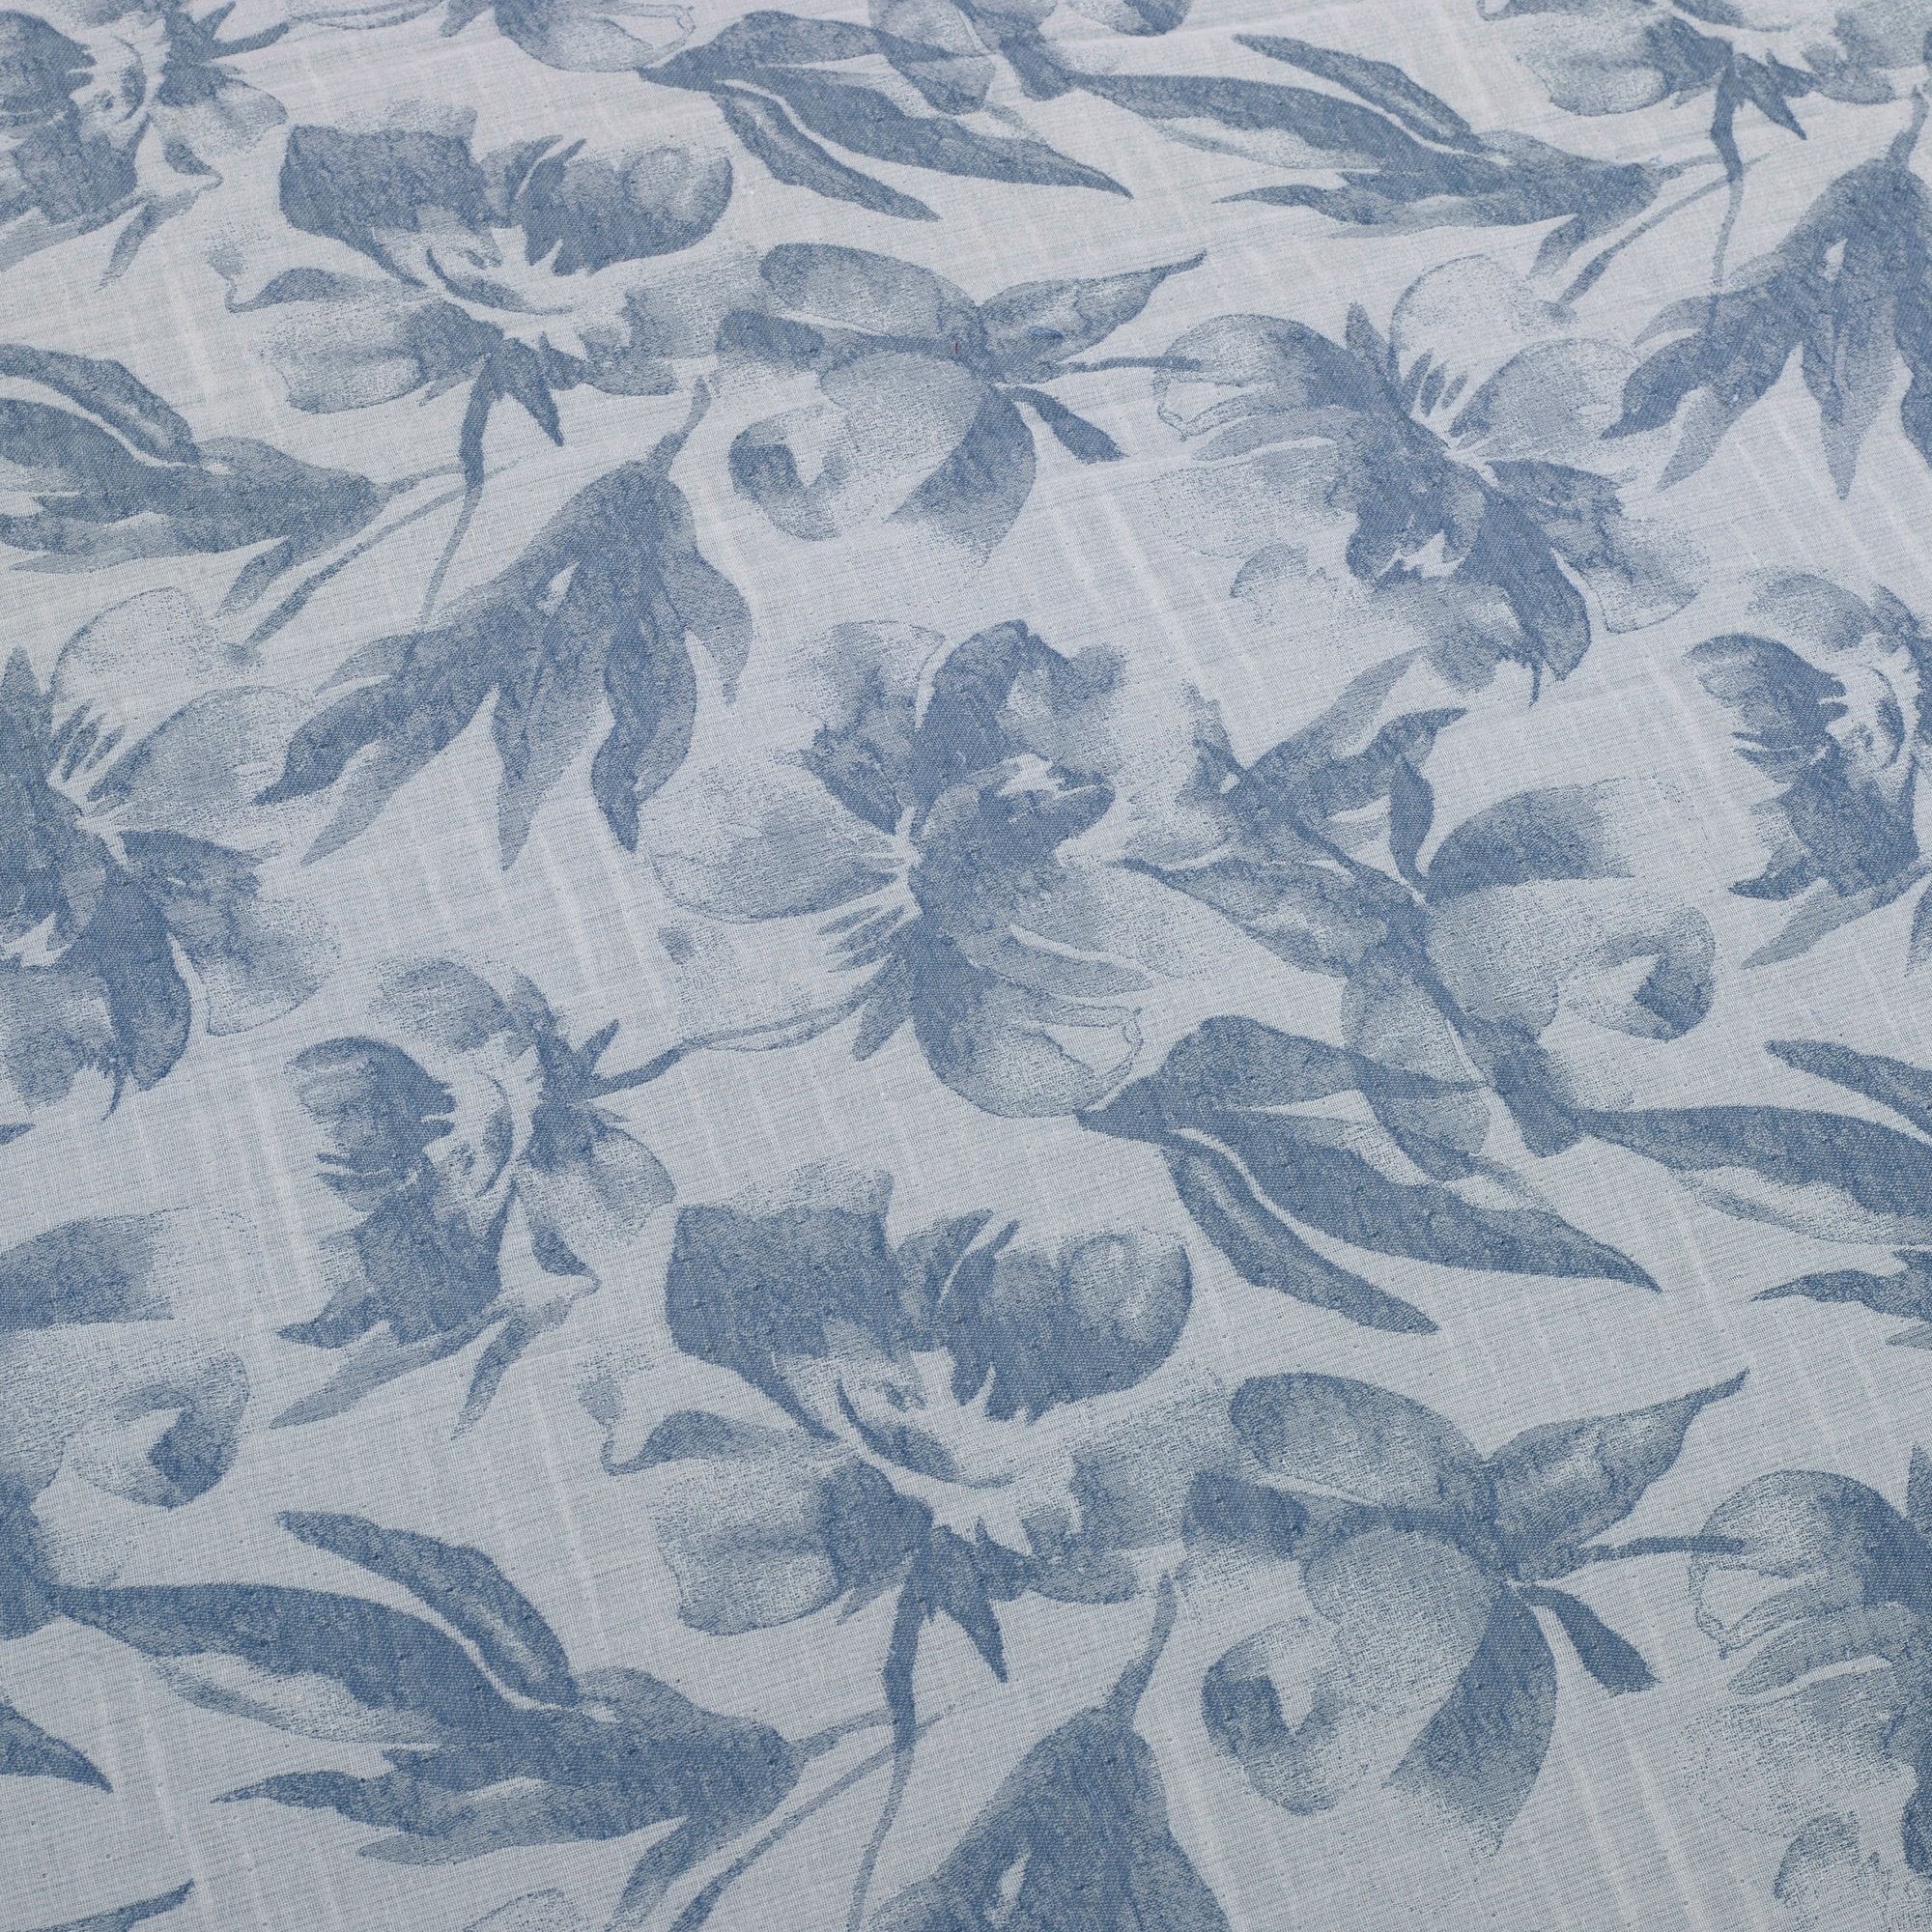 Almaria Soft Blue 3-Piece Comforter Set Comforter Sets By Donna Sharp